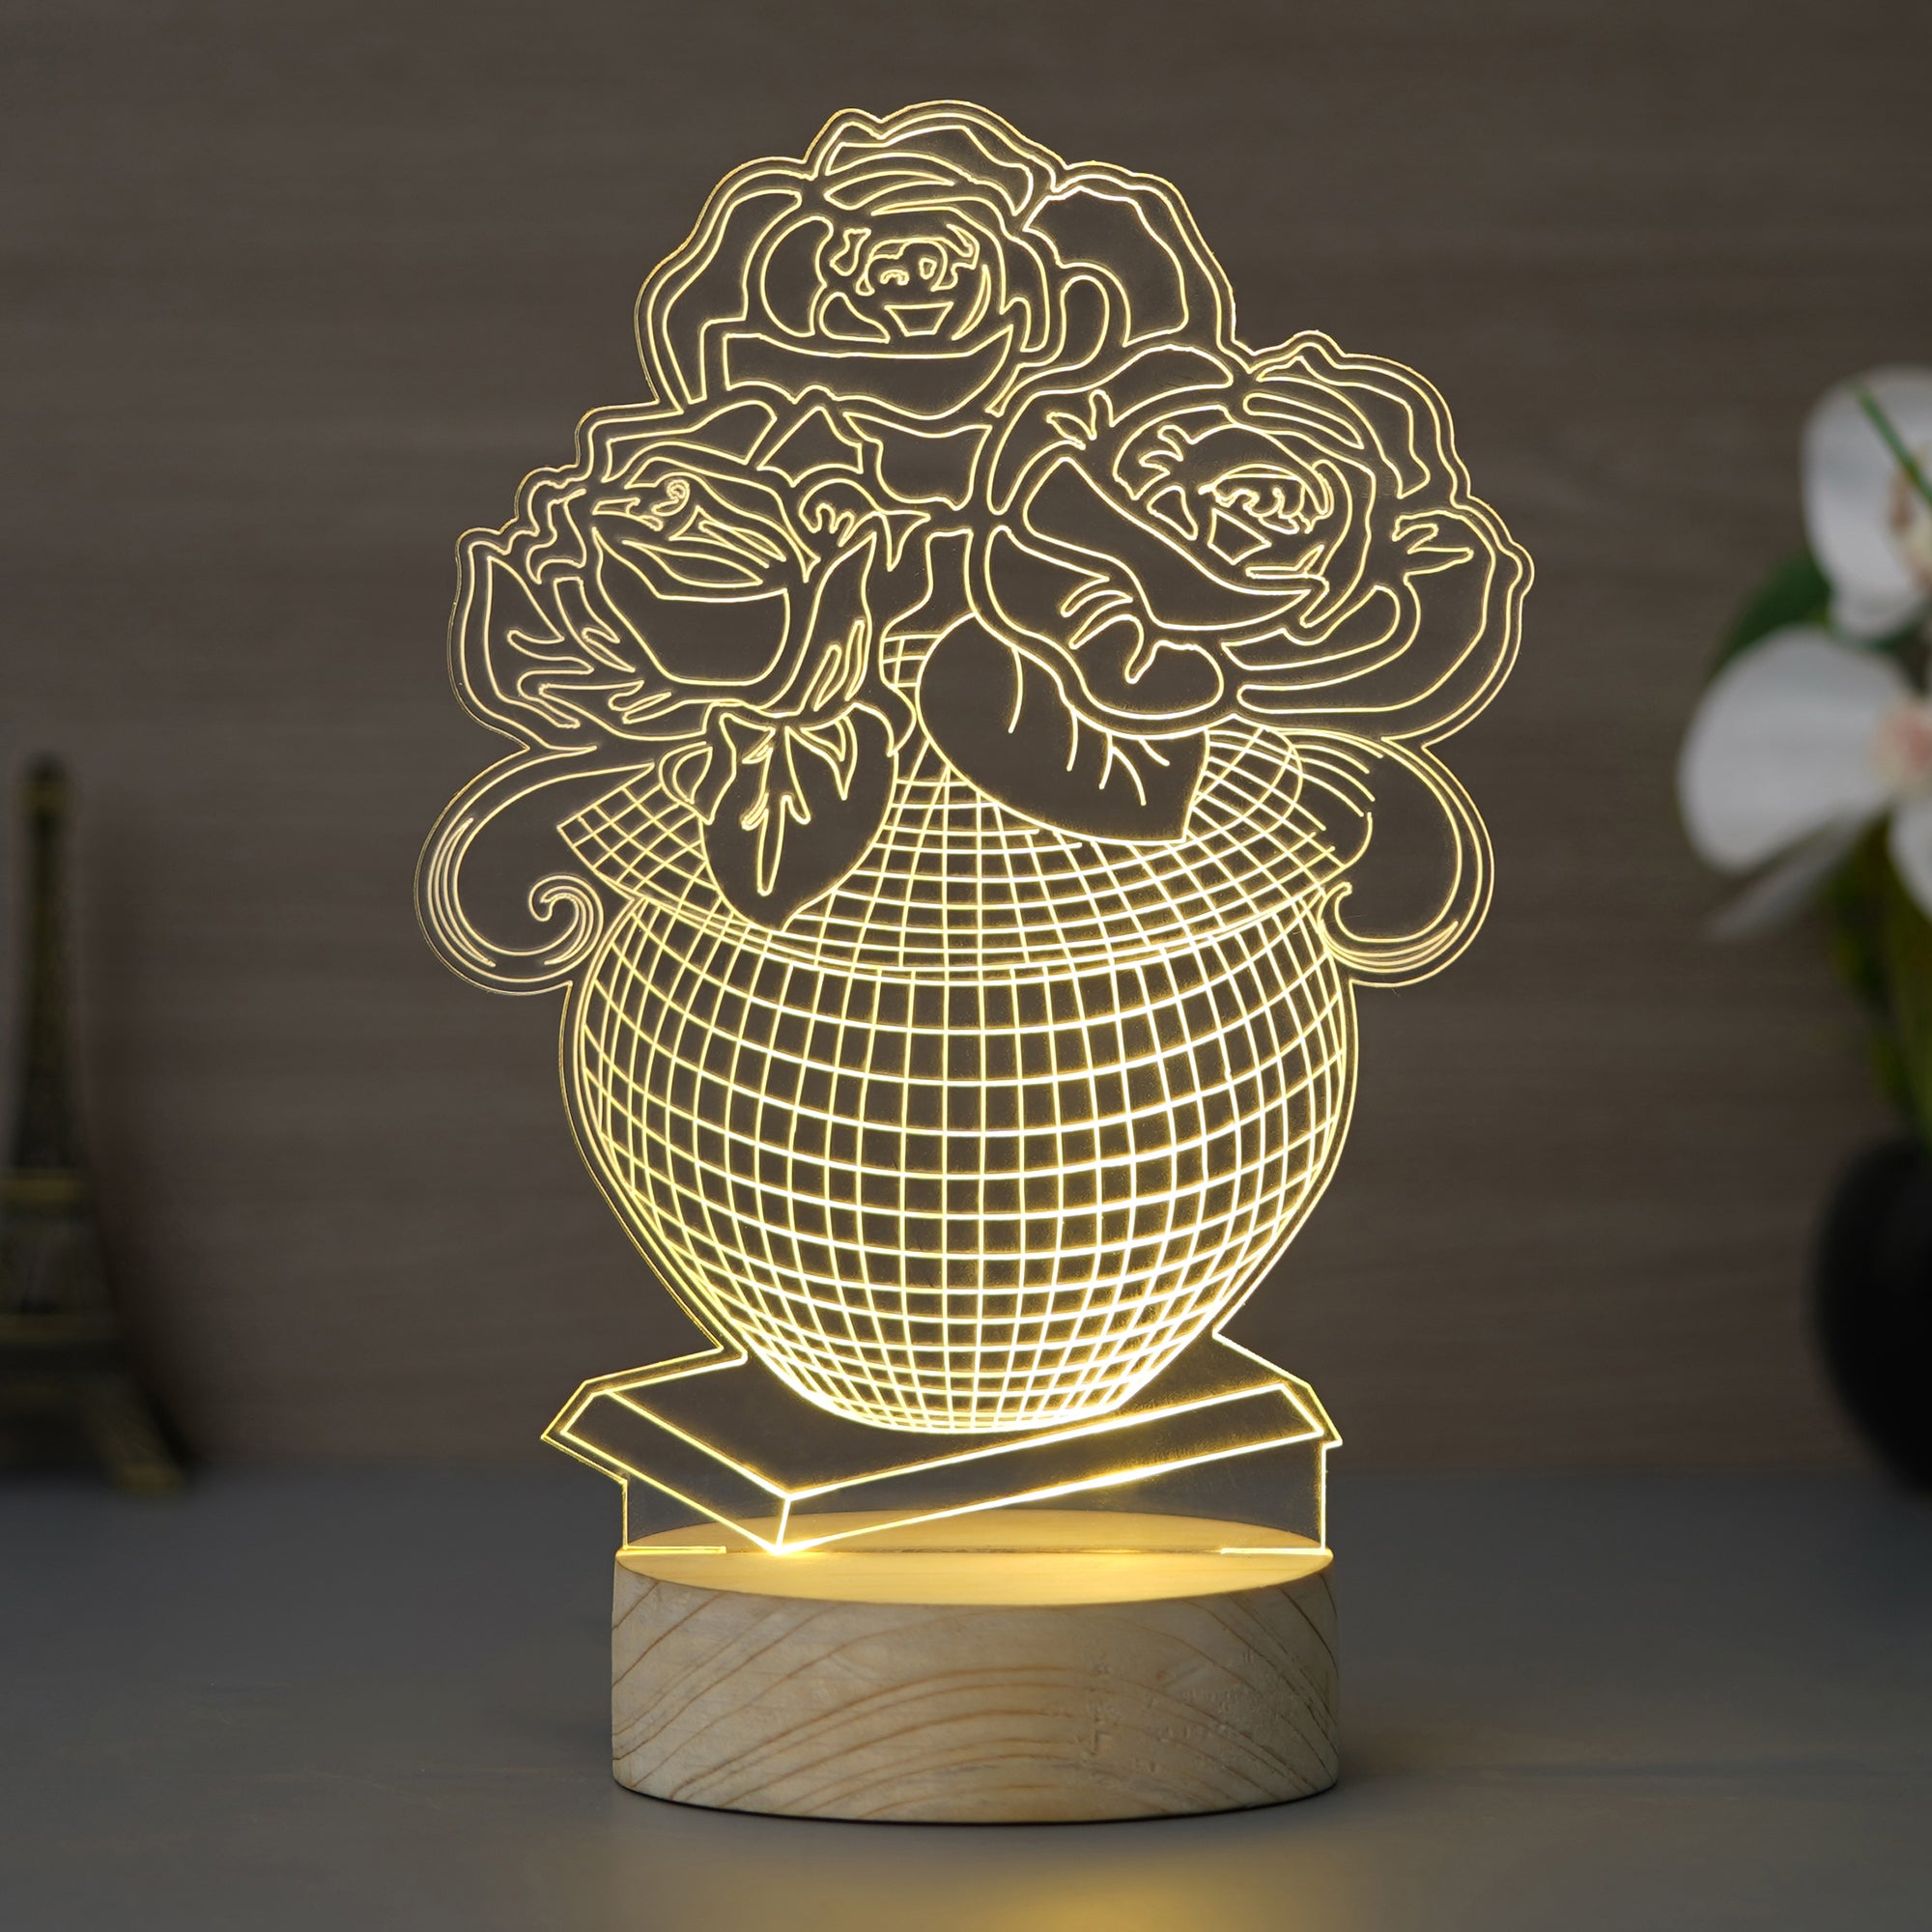 Rose Flower Pot Design Carved on Acrylic & Wood Base Night Lamp